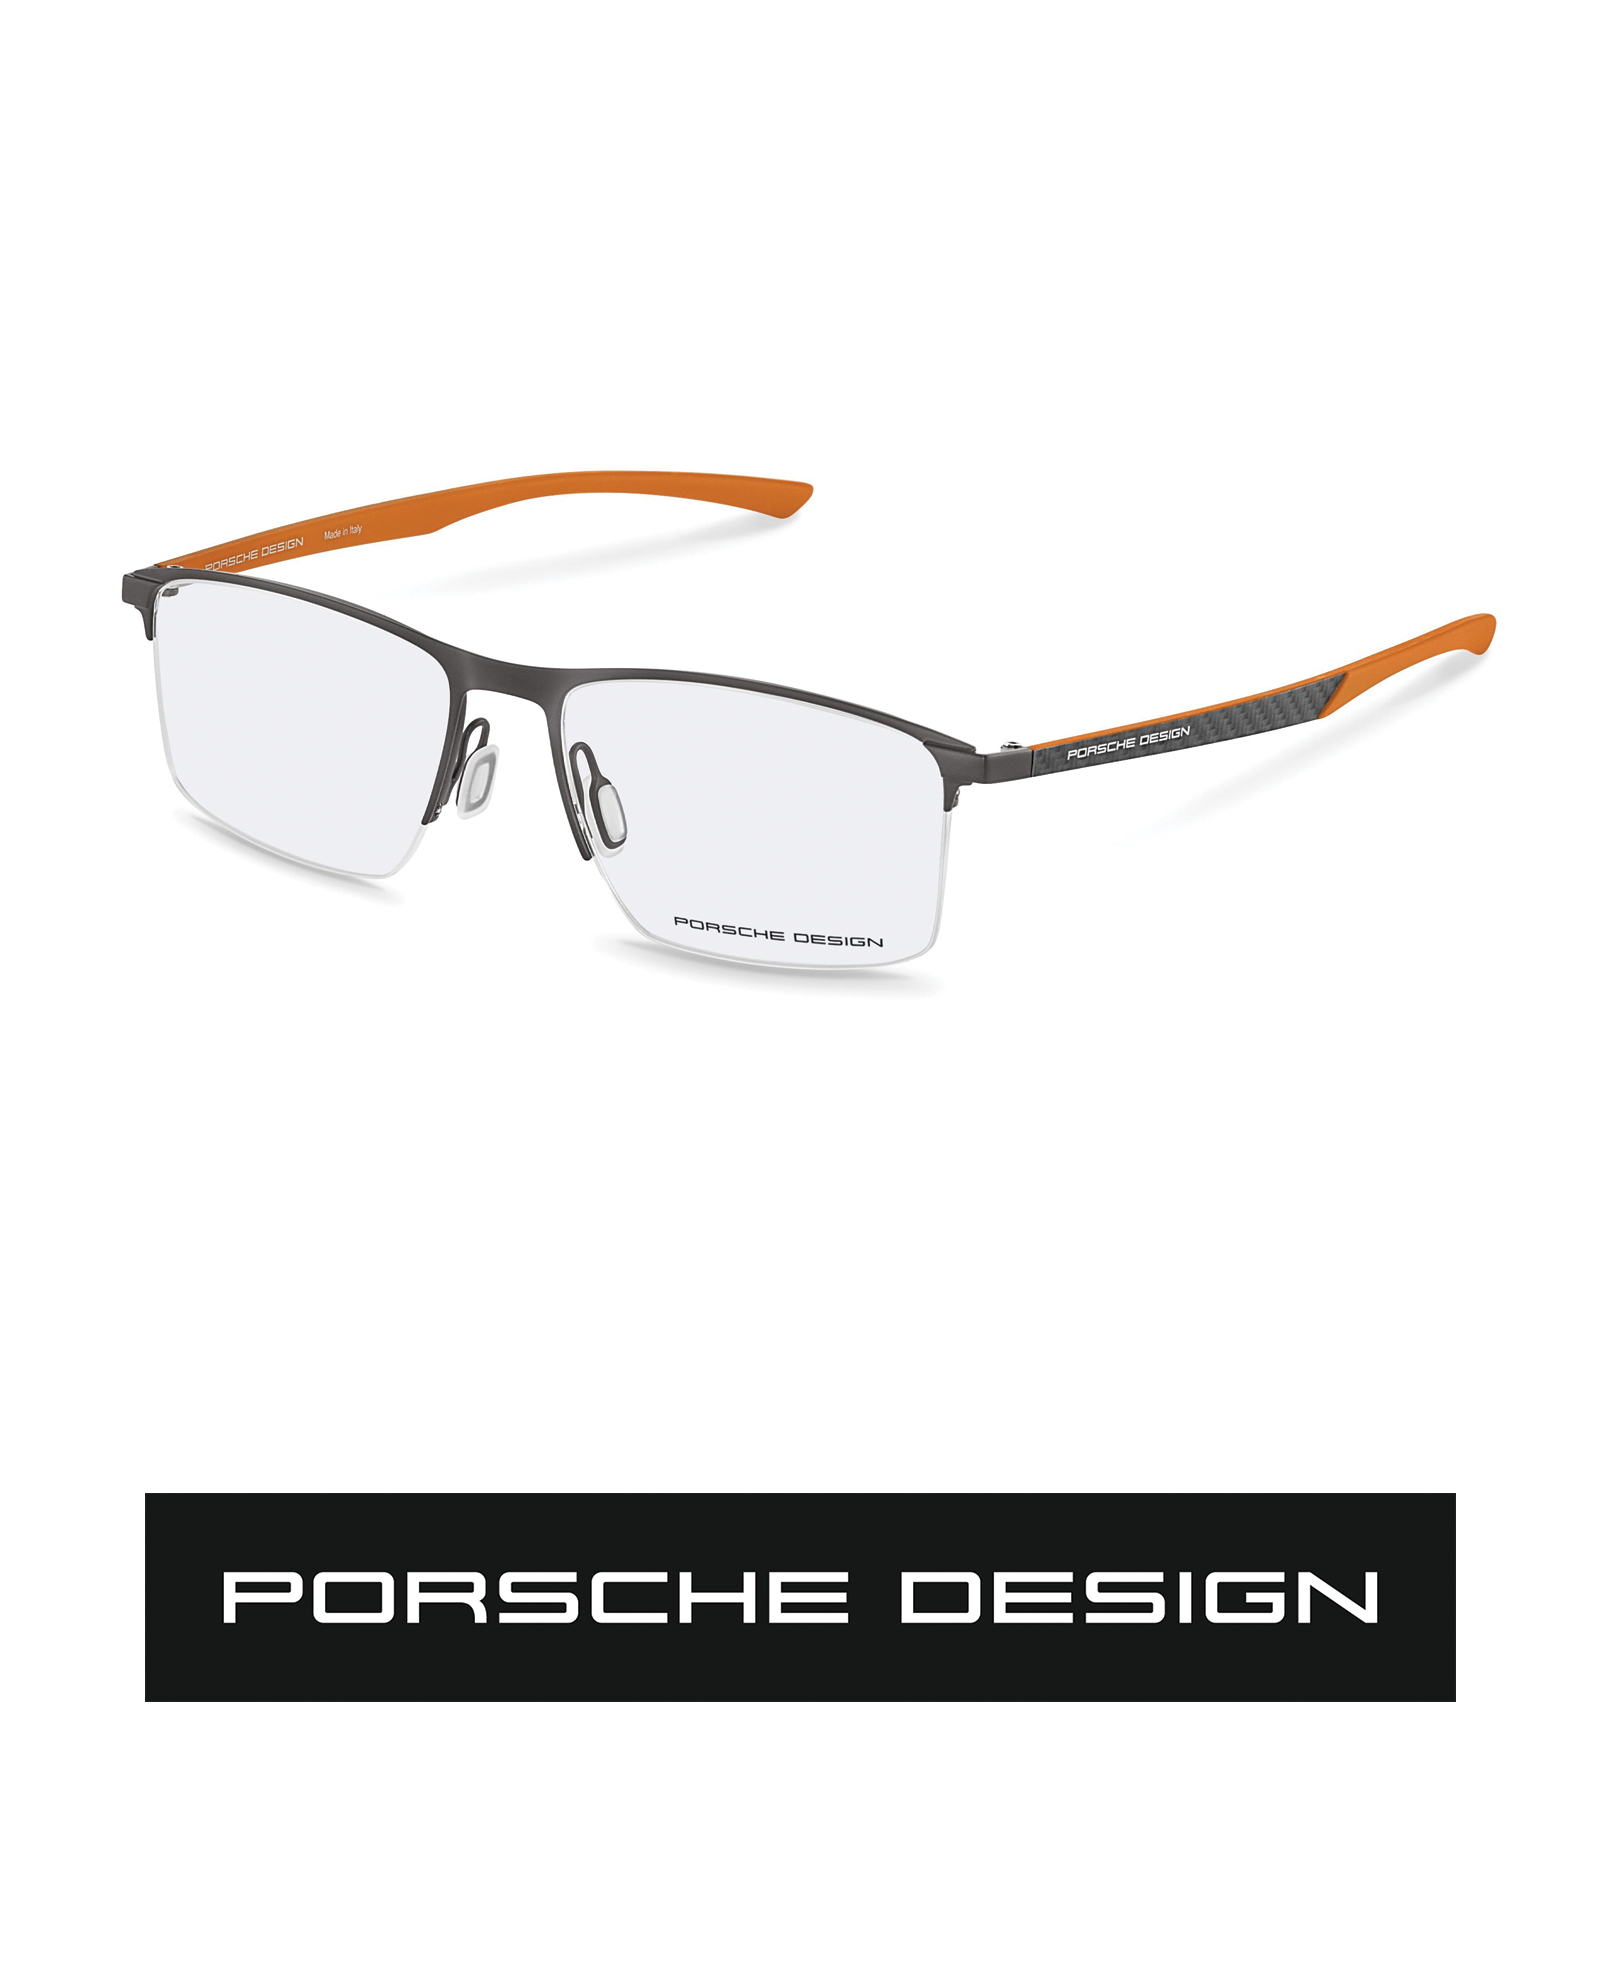 Porsche Design 8752 D | Oculus Optika